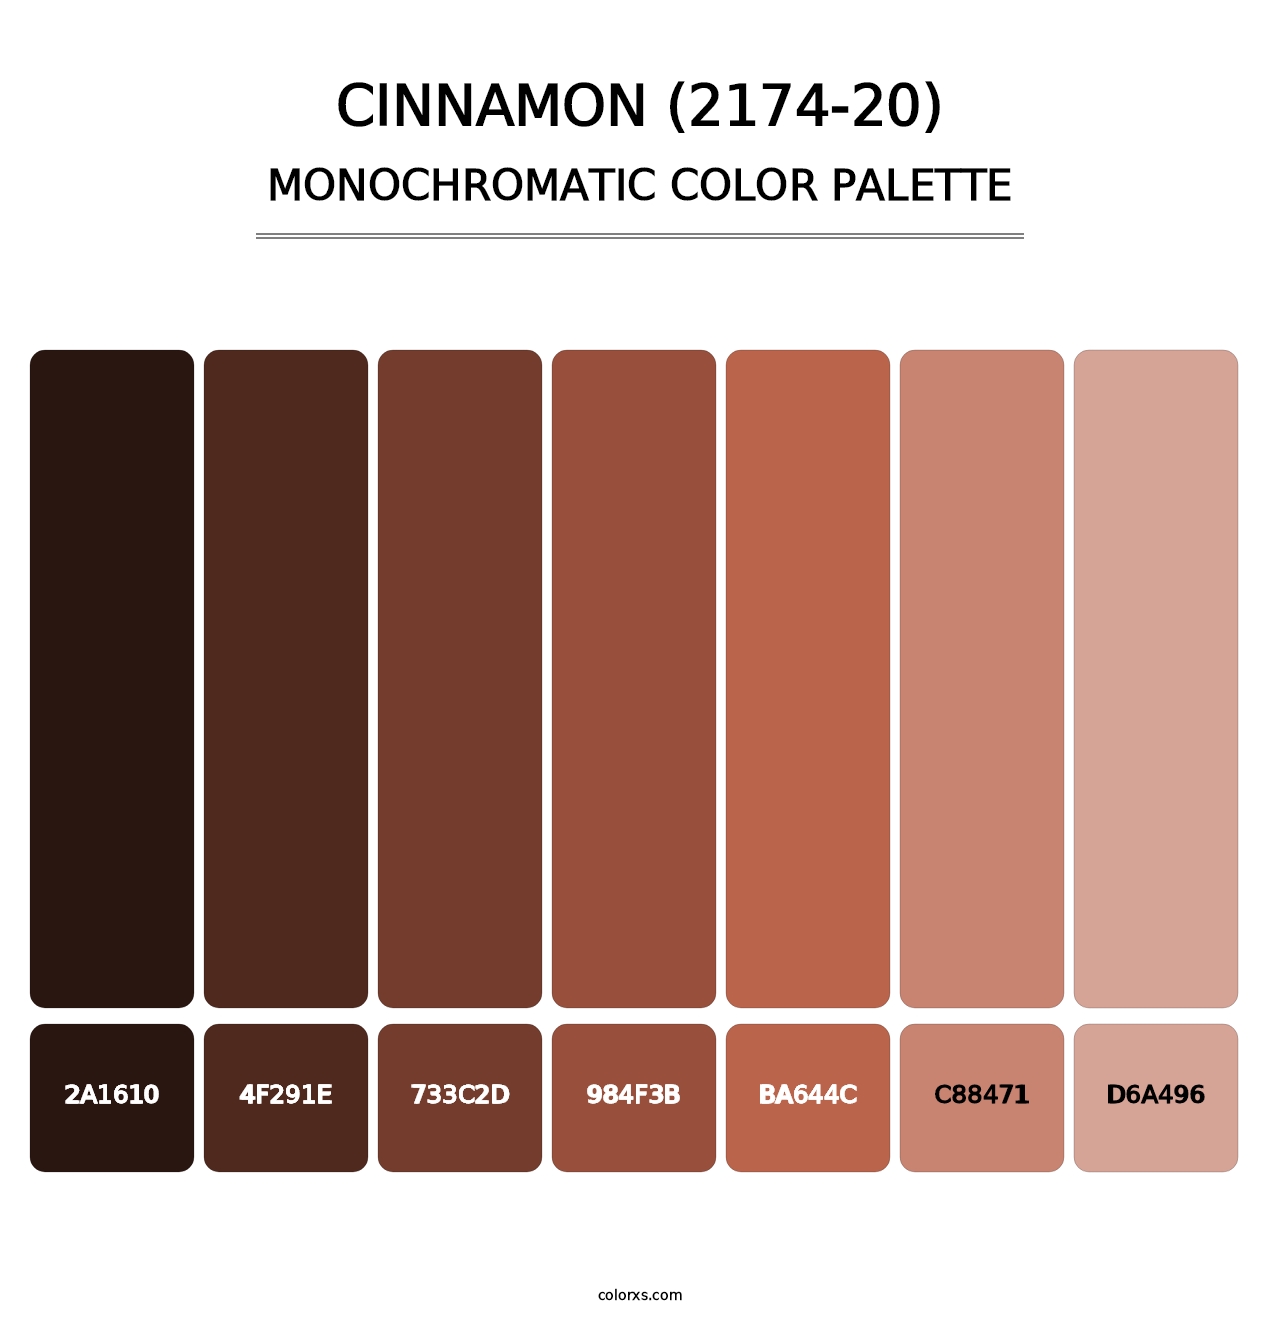 Cinnamon (2174-20) - Monochromatic Color Palette